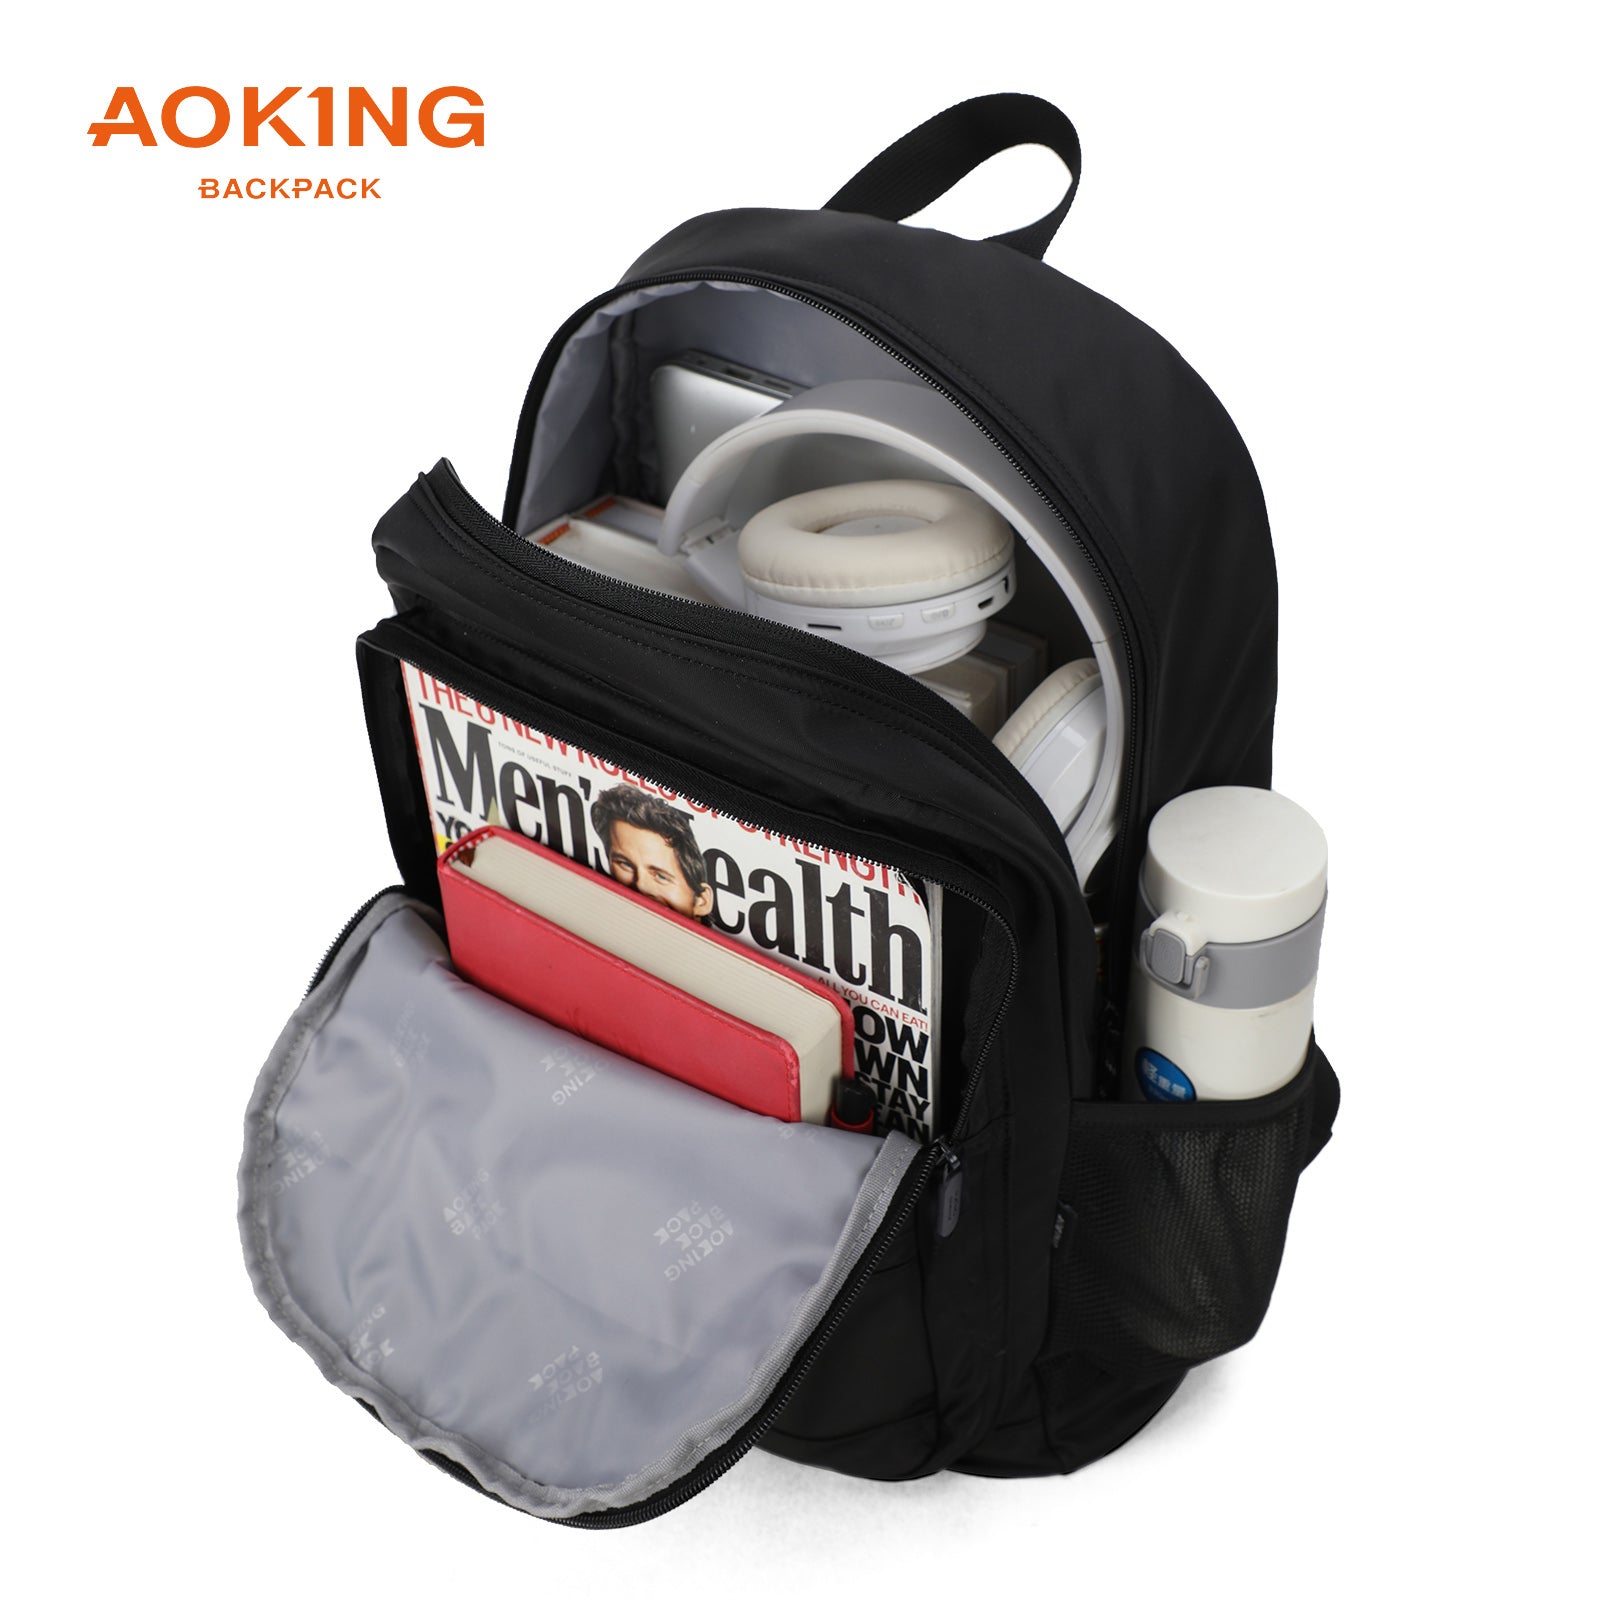 Aoking Backpack Casual Backpack Student Bag XN3306-5